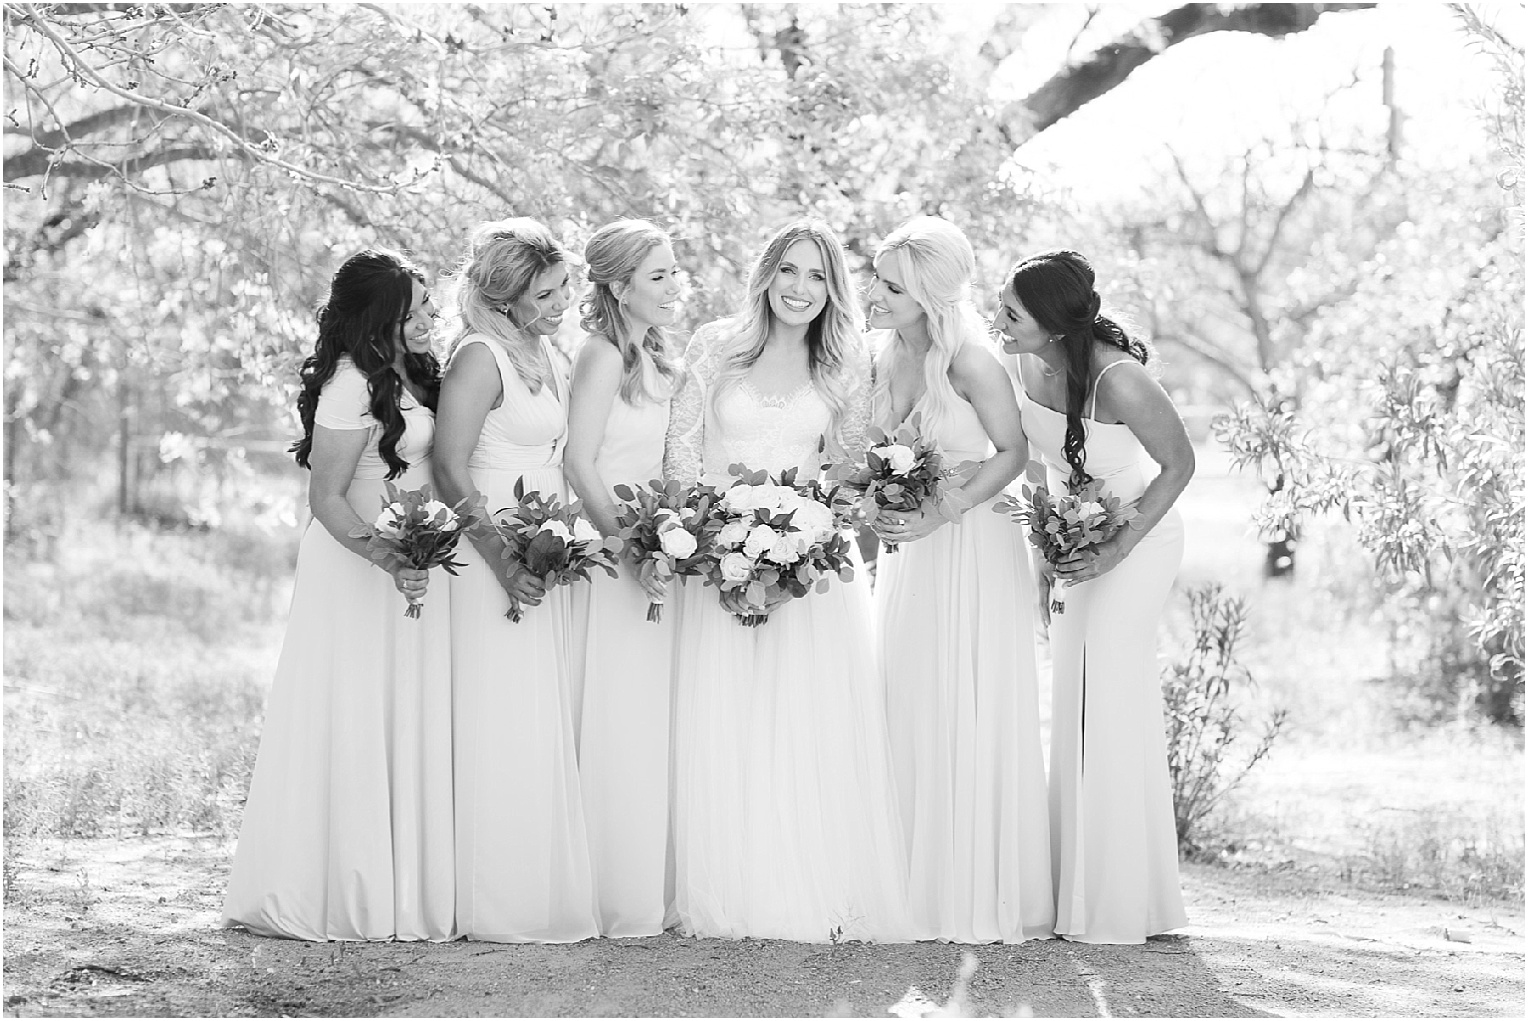 Intimate Backyard Wedding Tucson, AZ Chanel + Eddie blush bridesmaids dresses and greenery bouquets